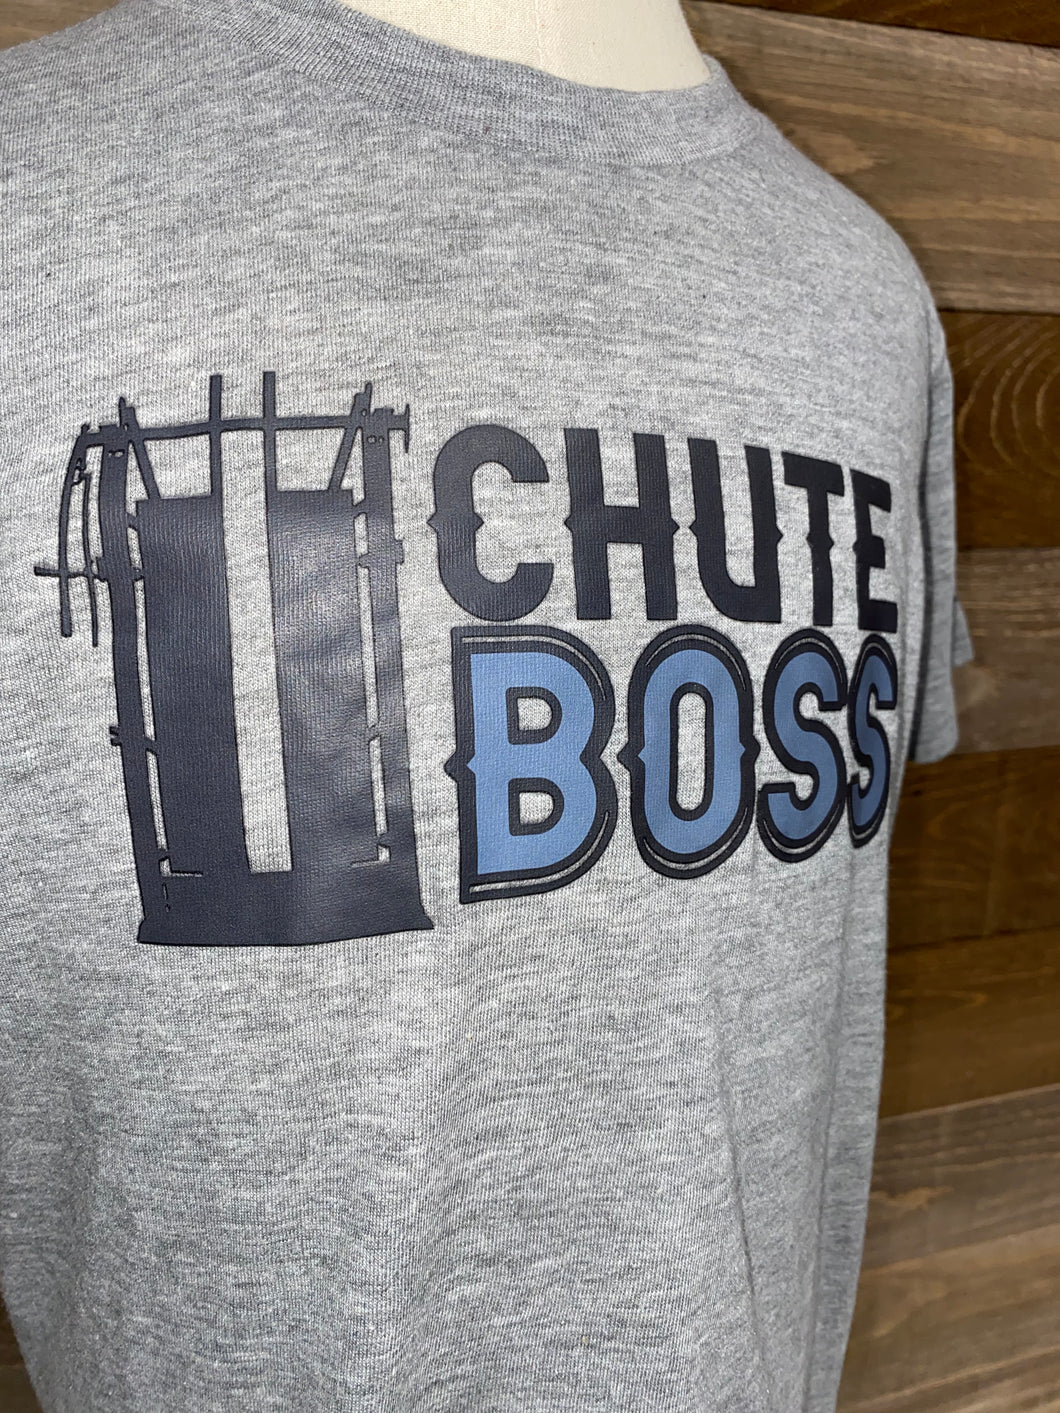 Homestead Clothing Boy's Chute Boss T-Shirt